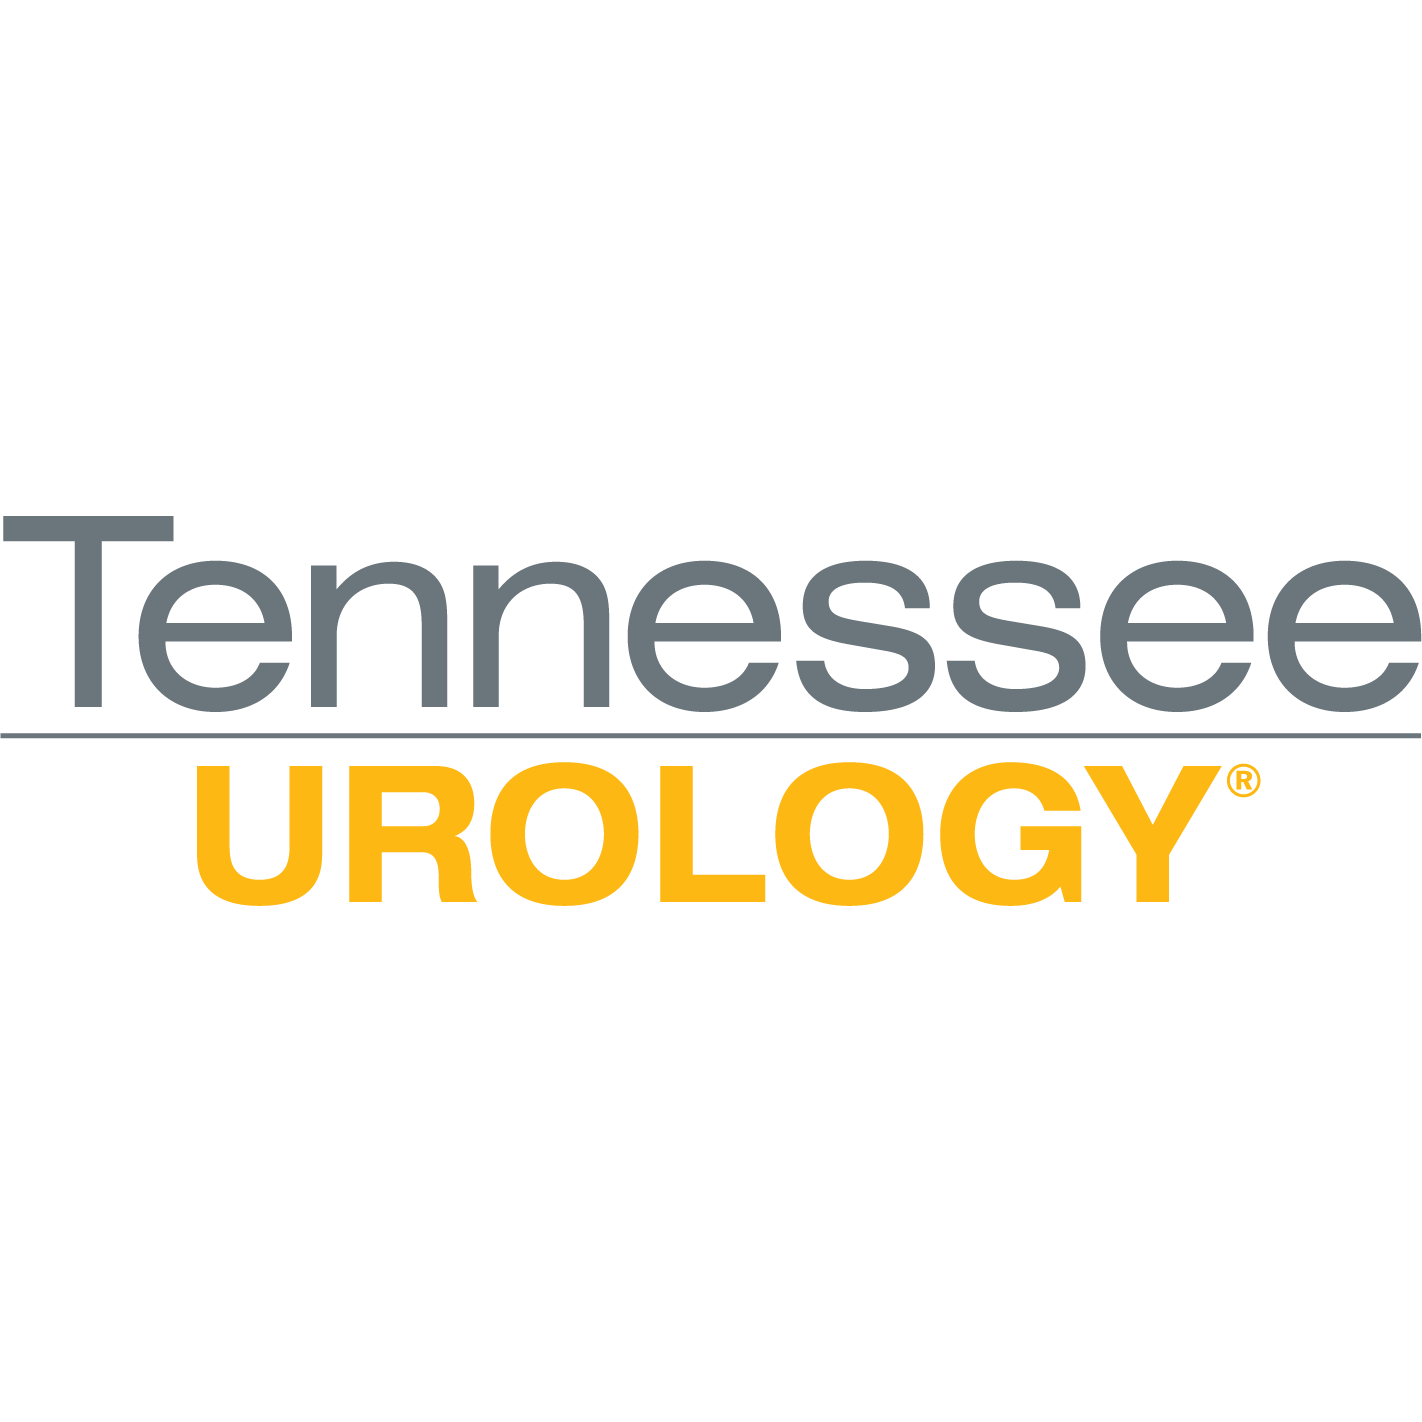 Tennessee Urology - Jefferson City - Summit Medical Building